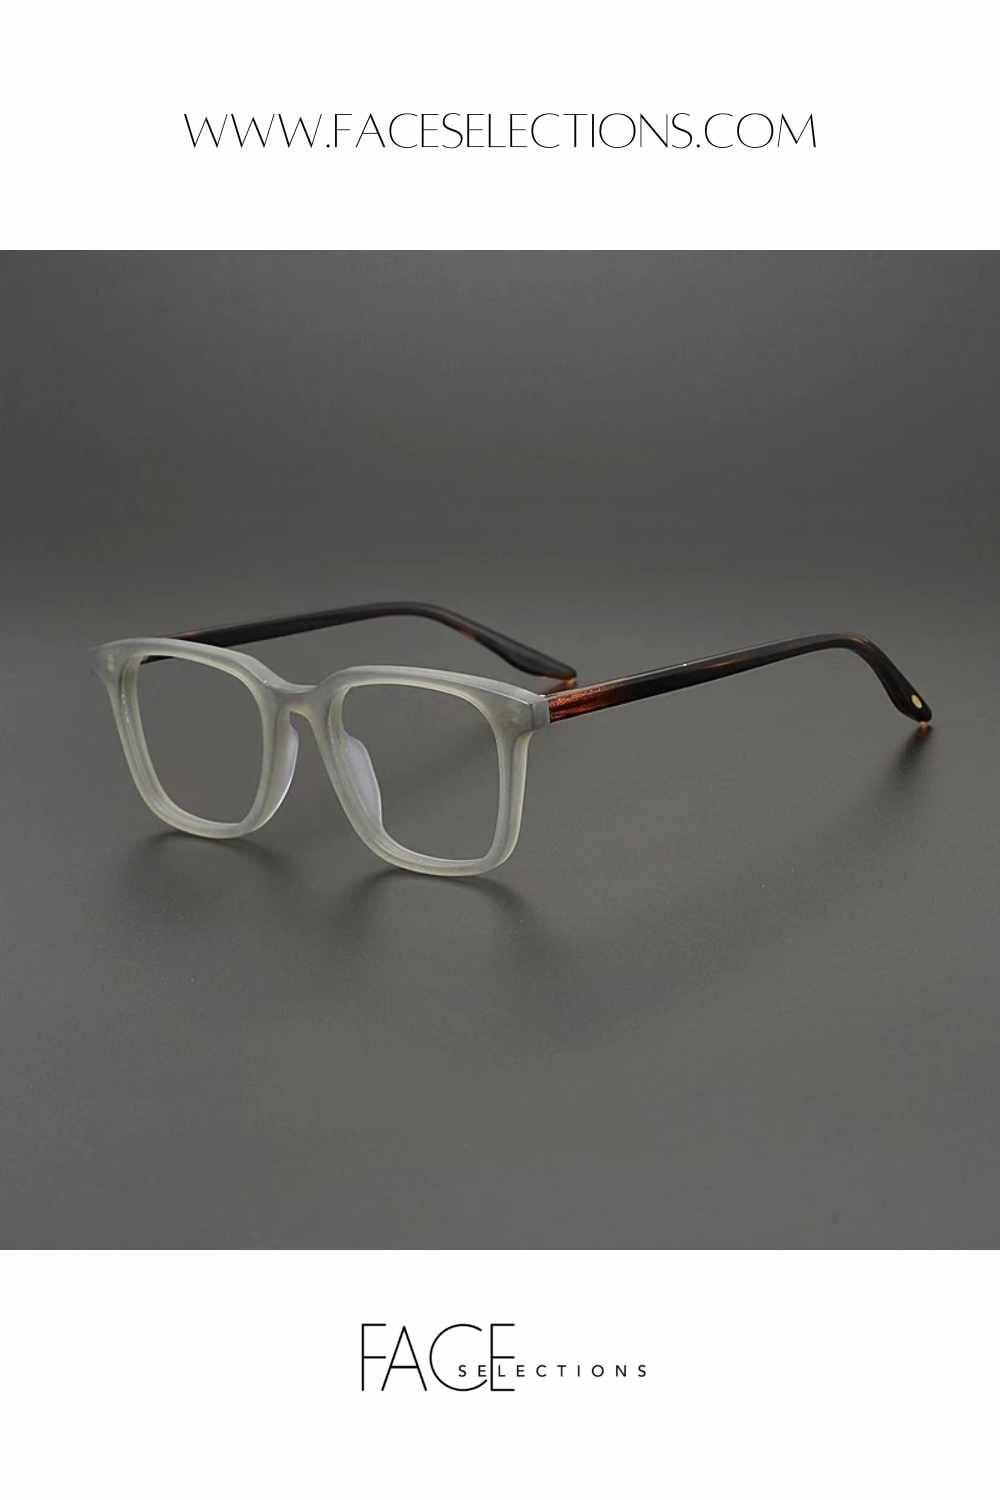 Retro Acetate Frame Eyeglasses